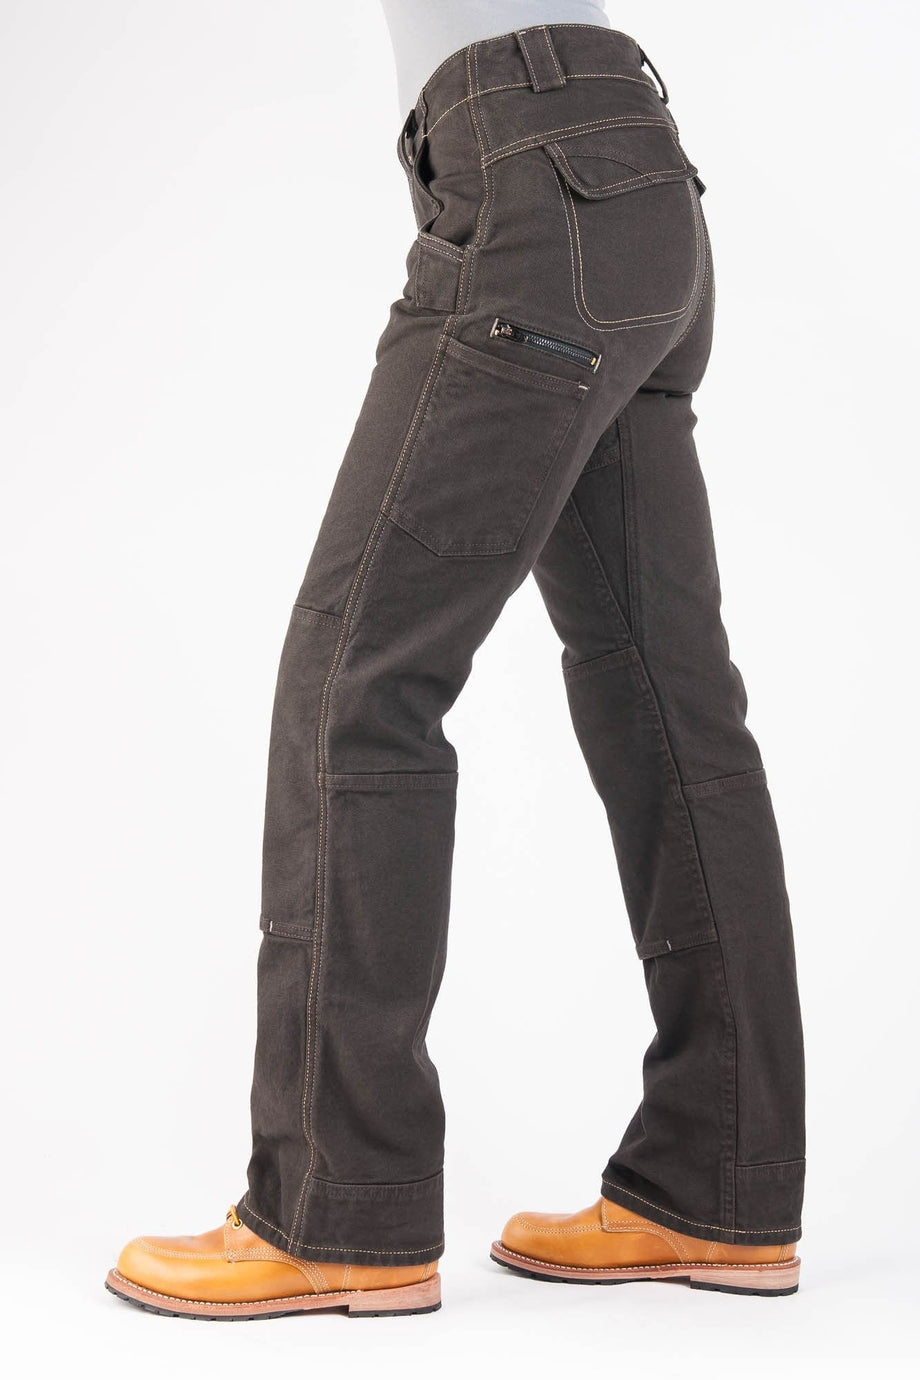 Dovetail Workwear Pants Women 18x32 Brown Carpenter Double Knee